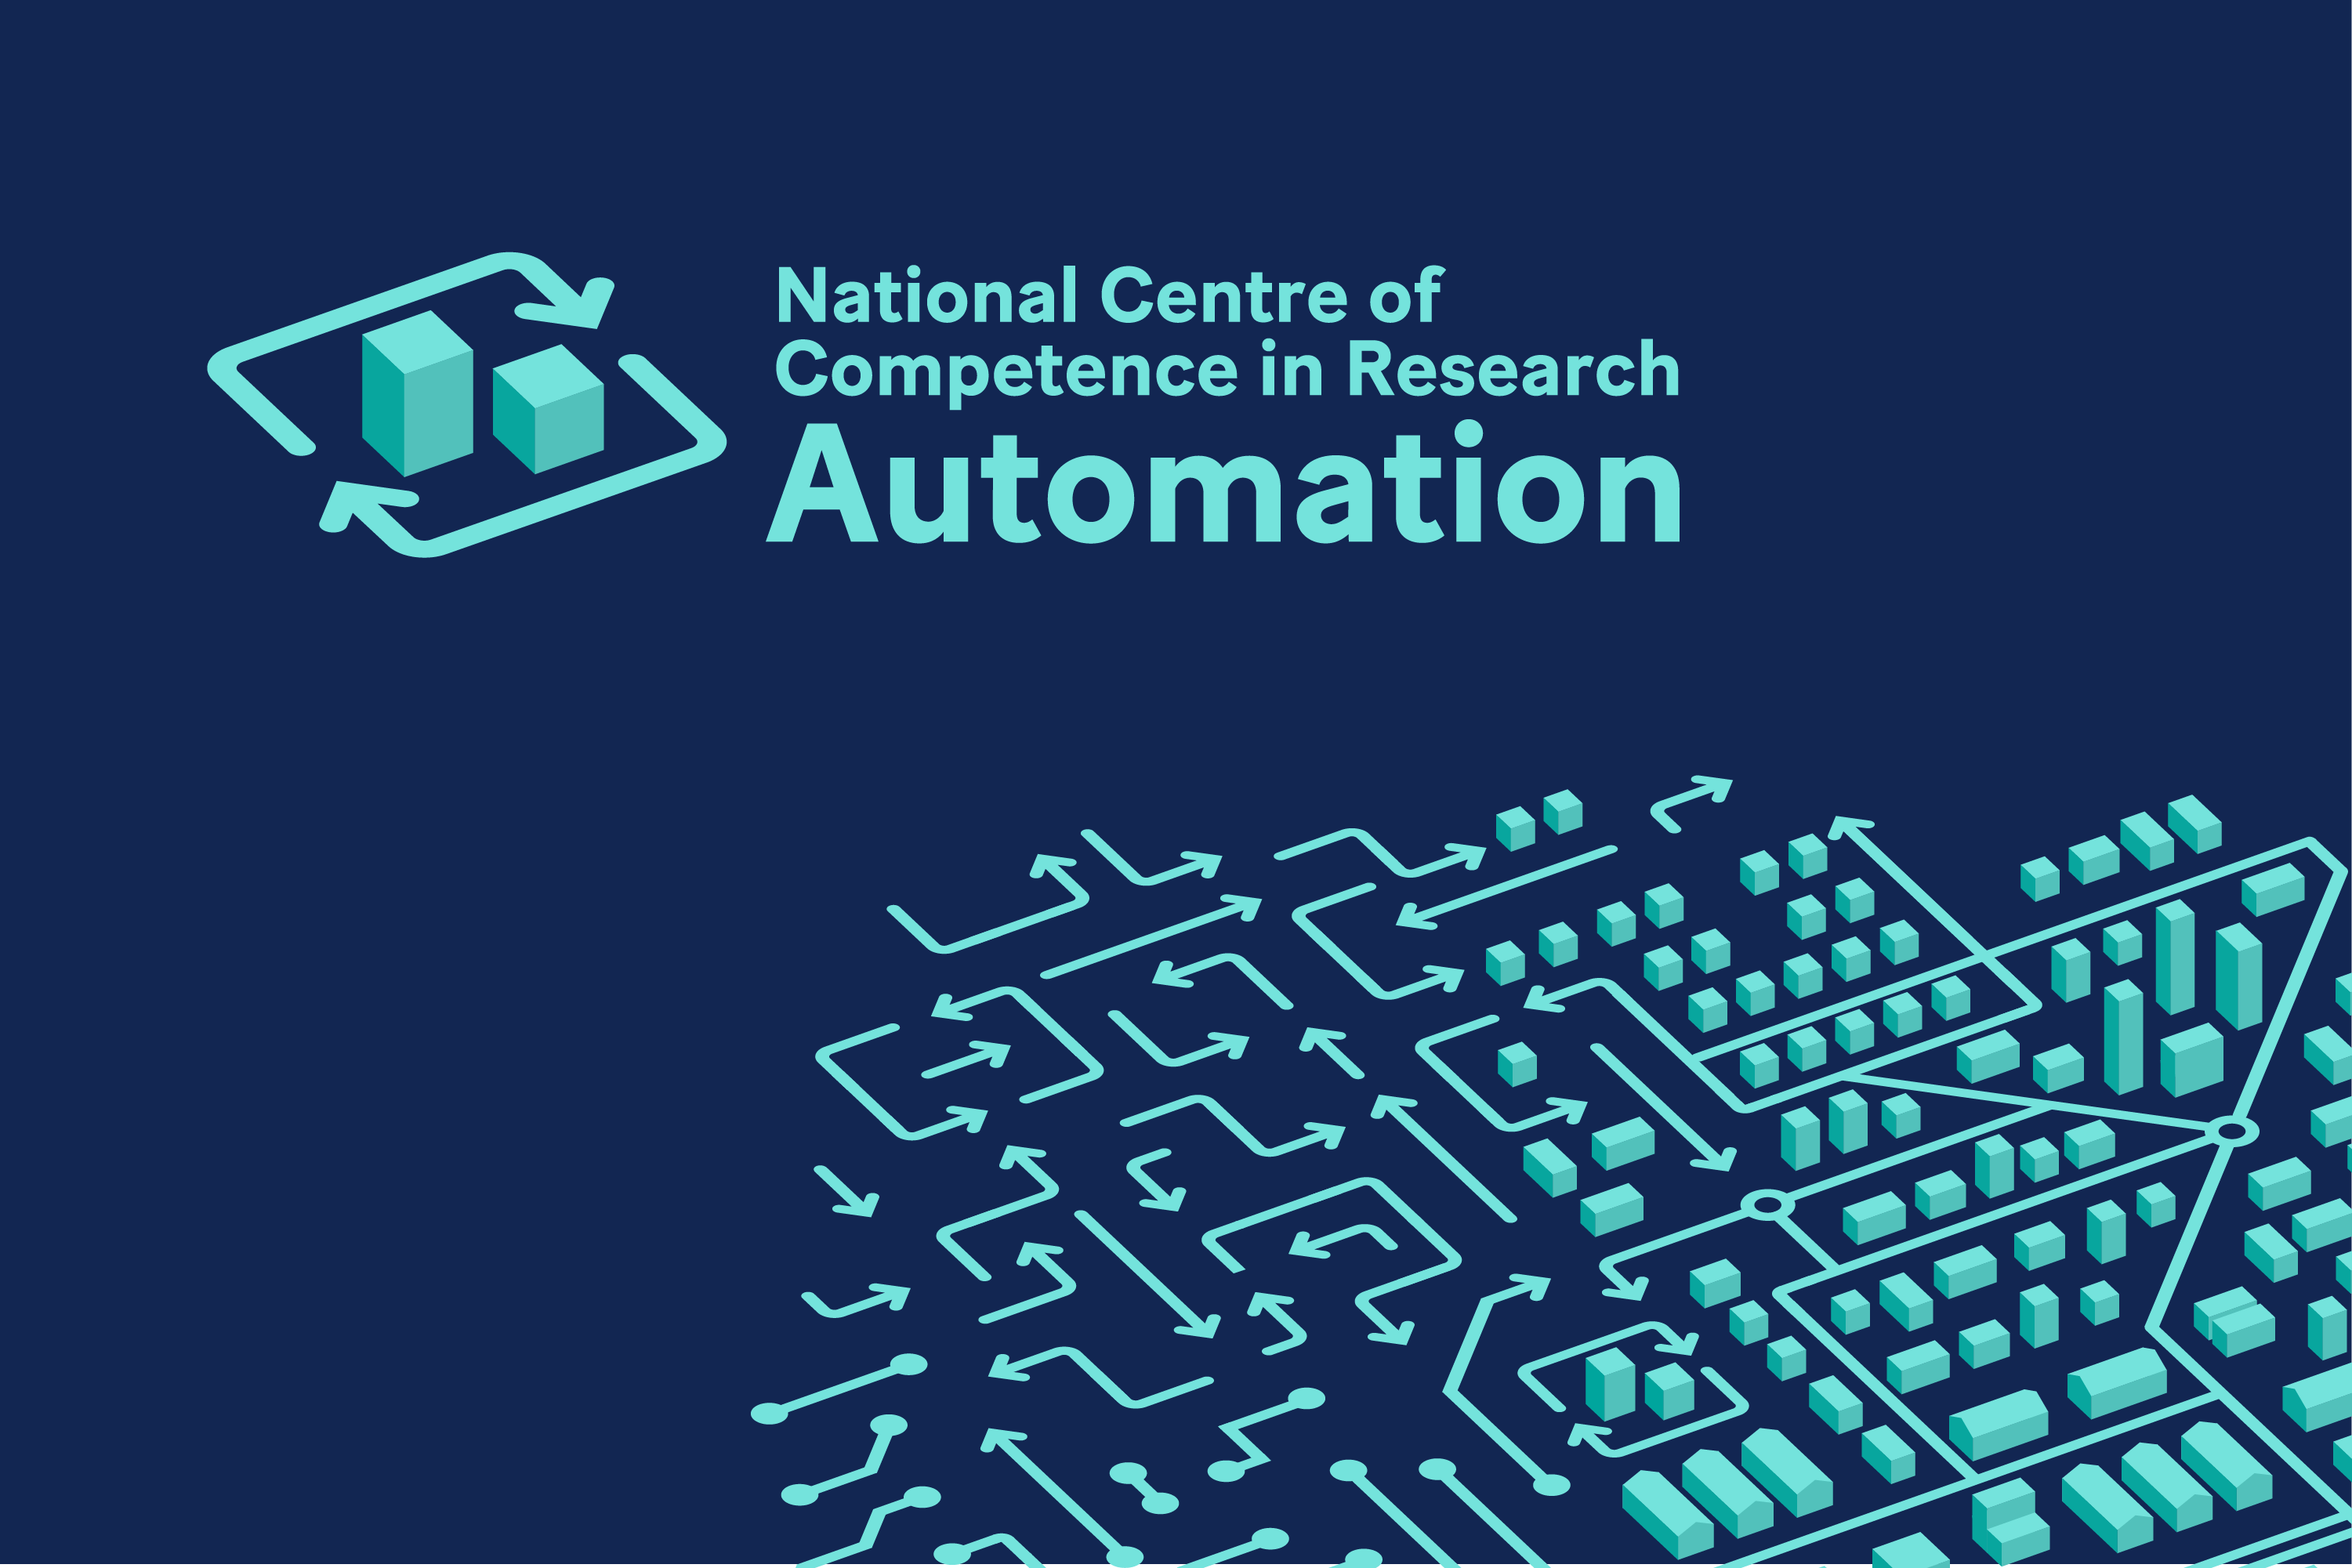 NCCR Automation logo and pattern